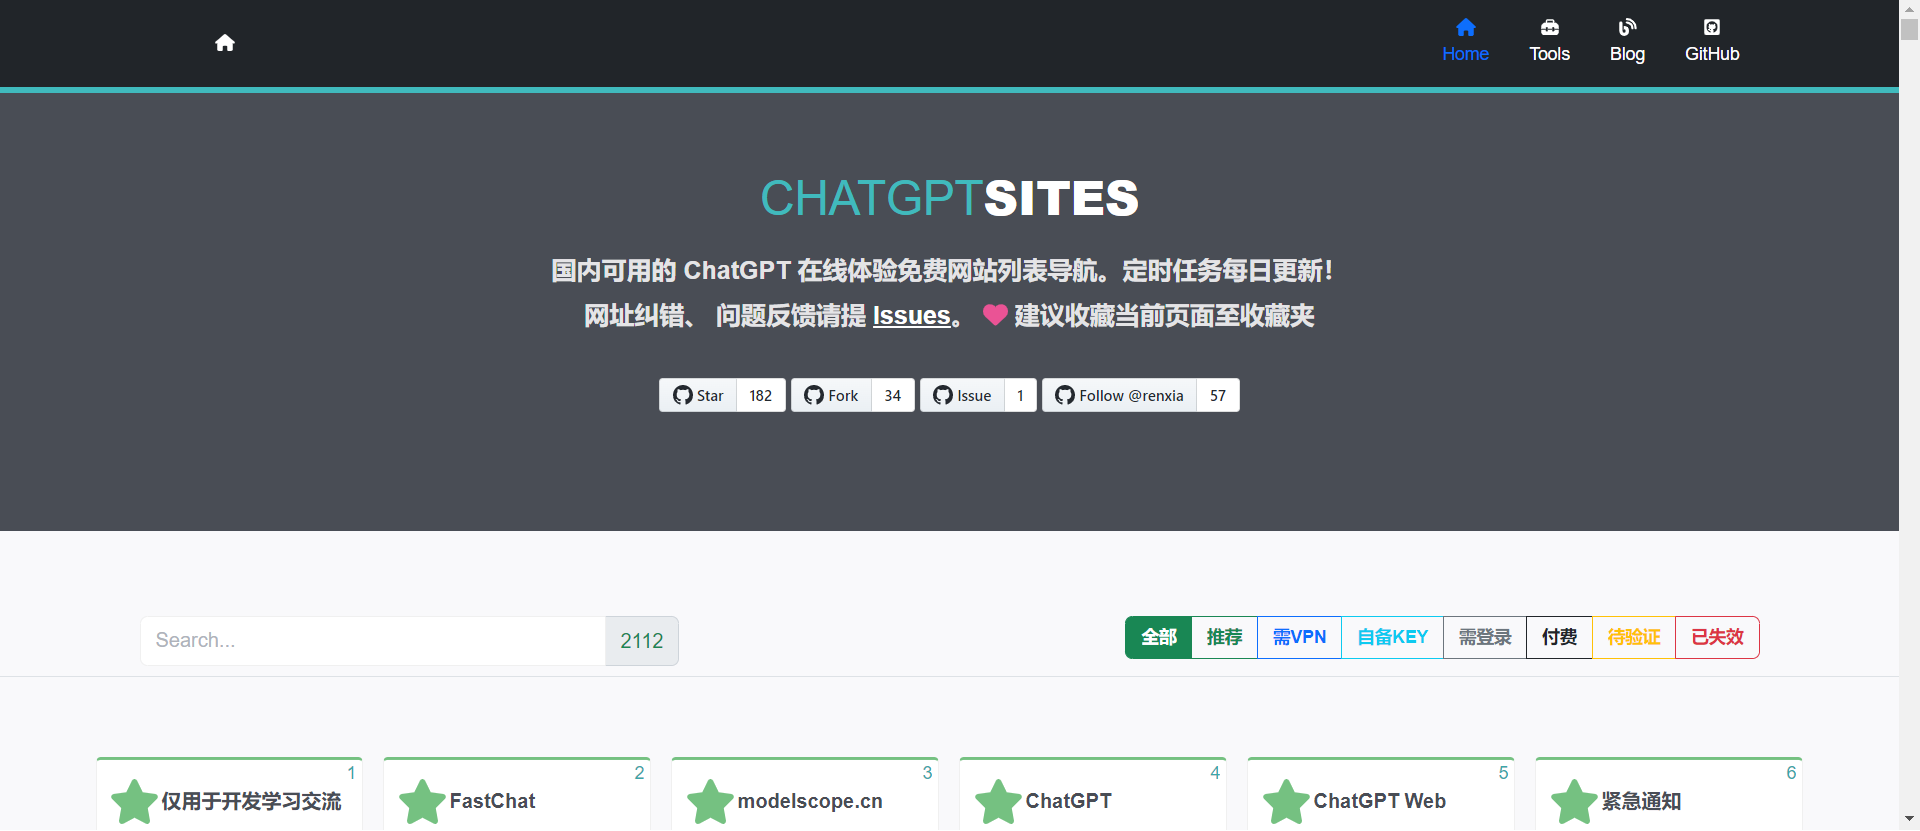 ChatGPT在线聊天系统付费版: 涉及技术栈 - 后端 - Java17、Golang、Redis、Redisson、RabbitMQ、CloudStreamRabbitMQ、MySQL ...